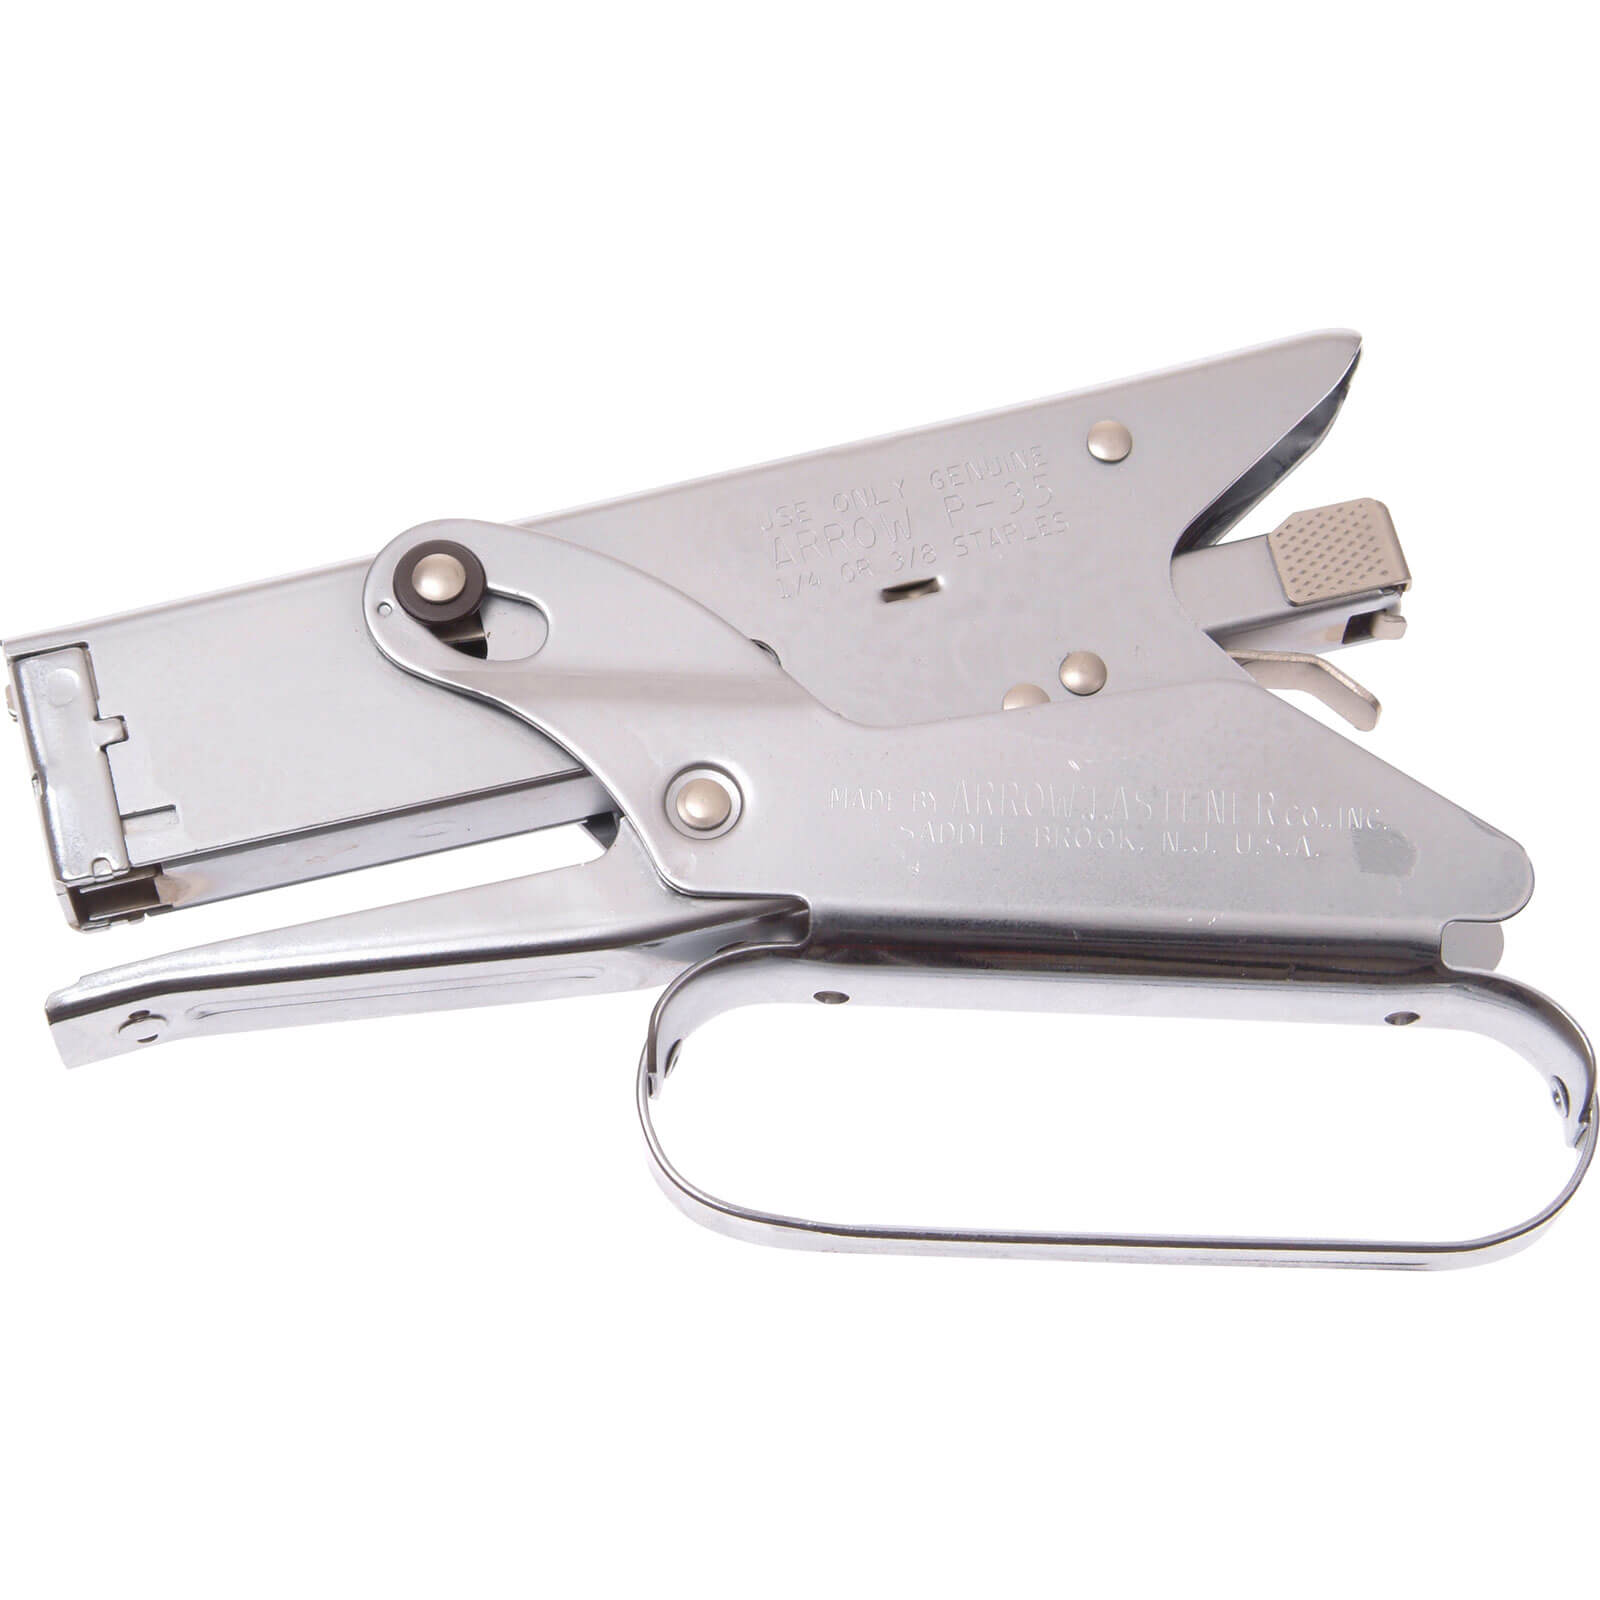 Arrow P35 Stapler Plier Type